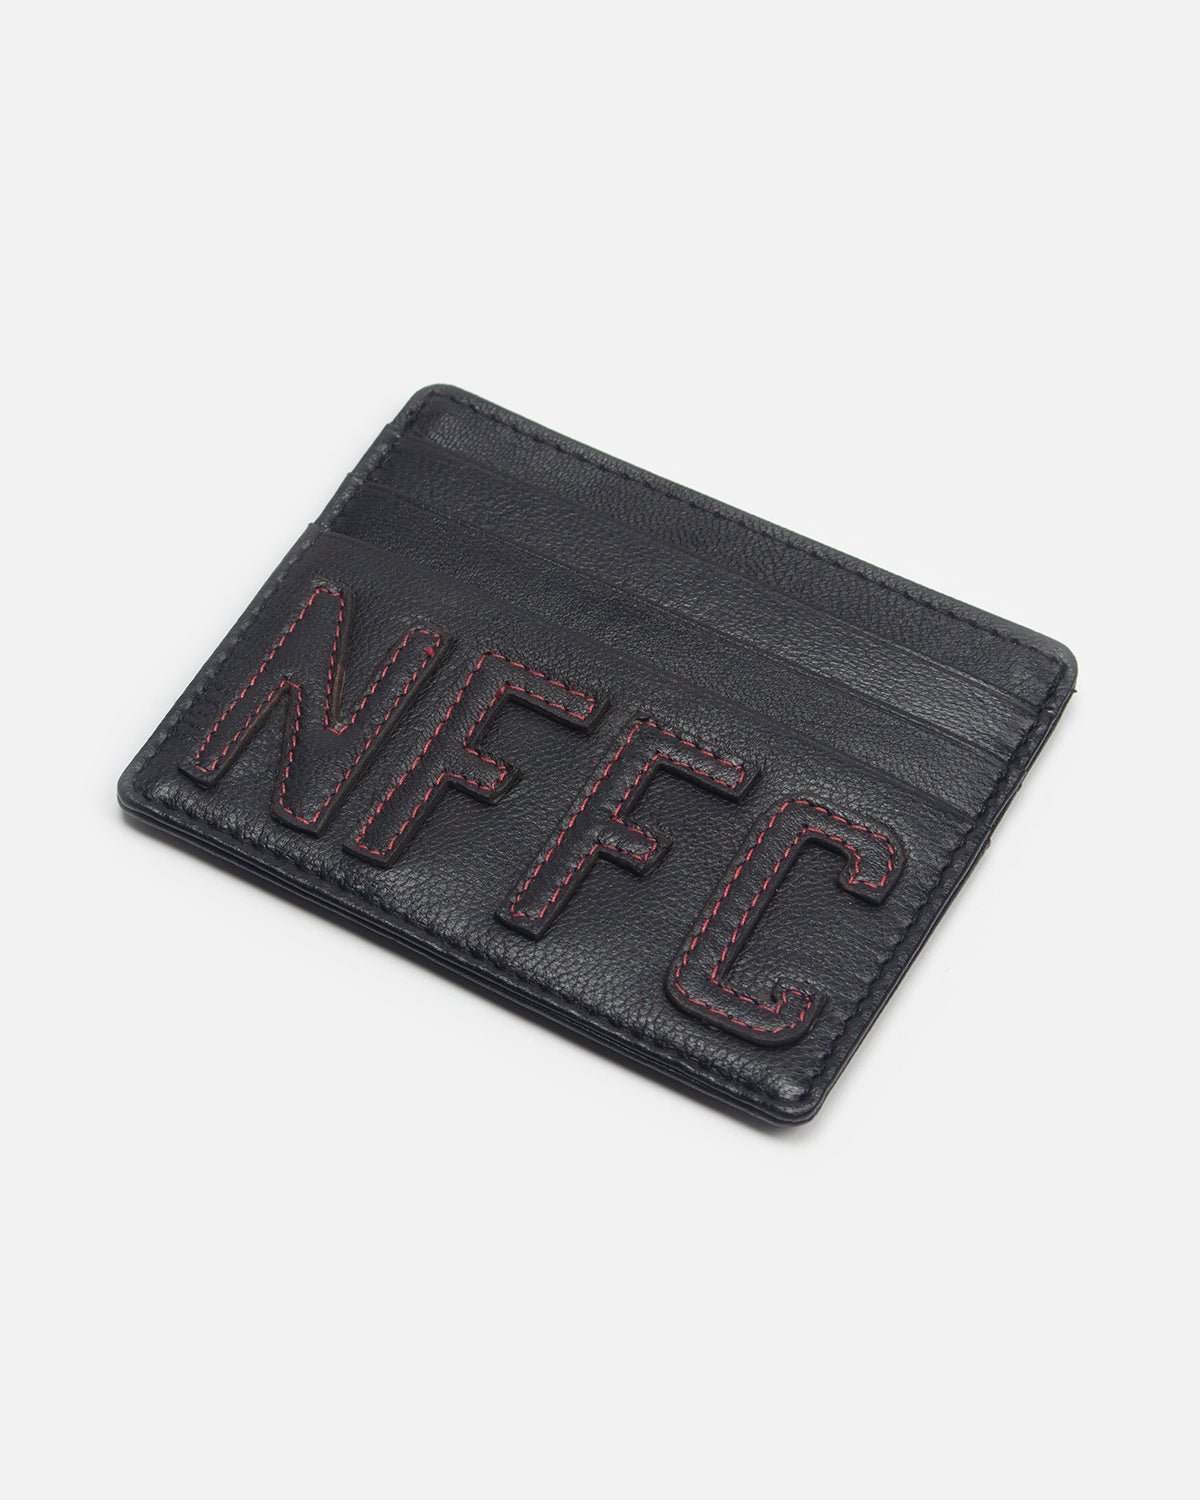 NFFC Text Card Holder - Nottingham Forest FC